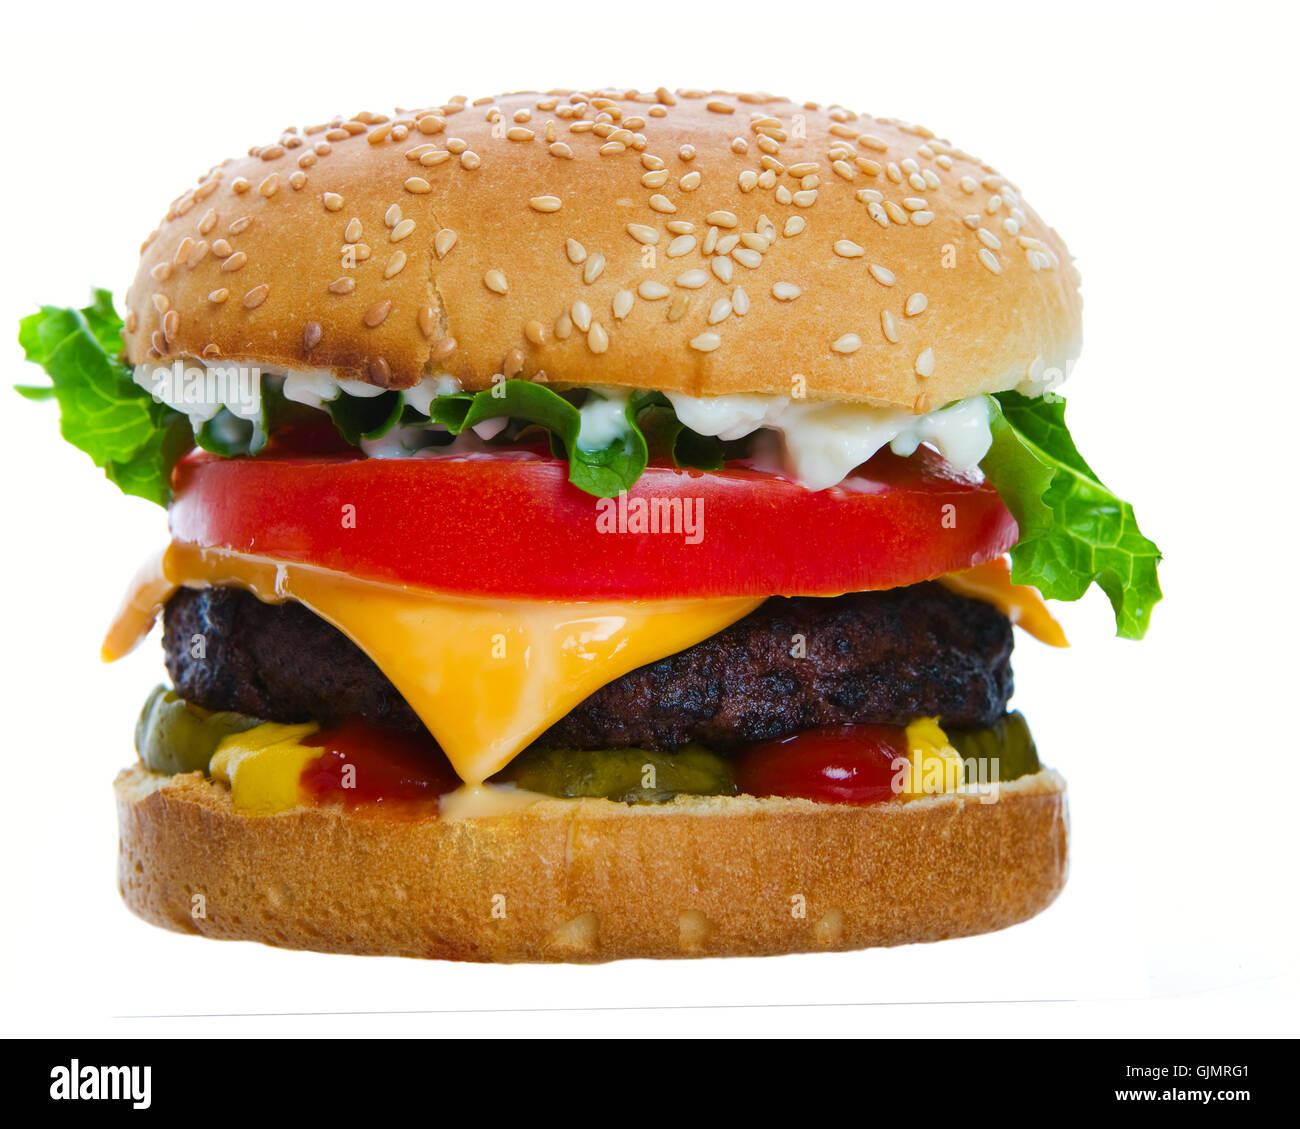 sandwich juicy cheeseburger Stock Photo